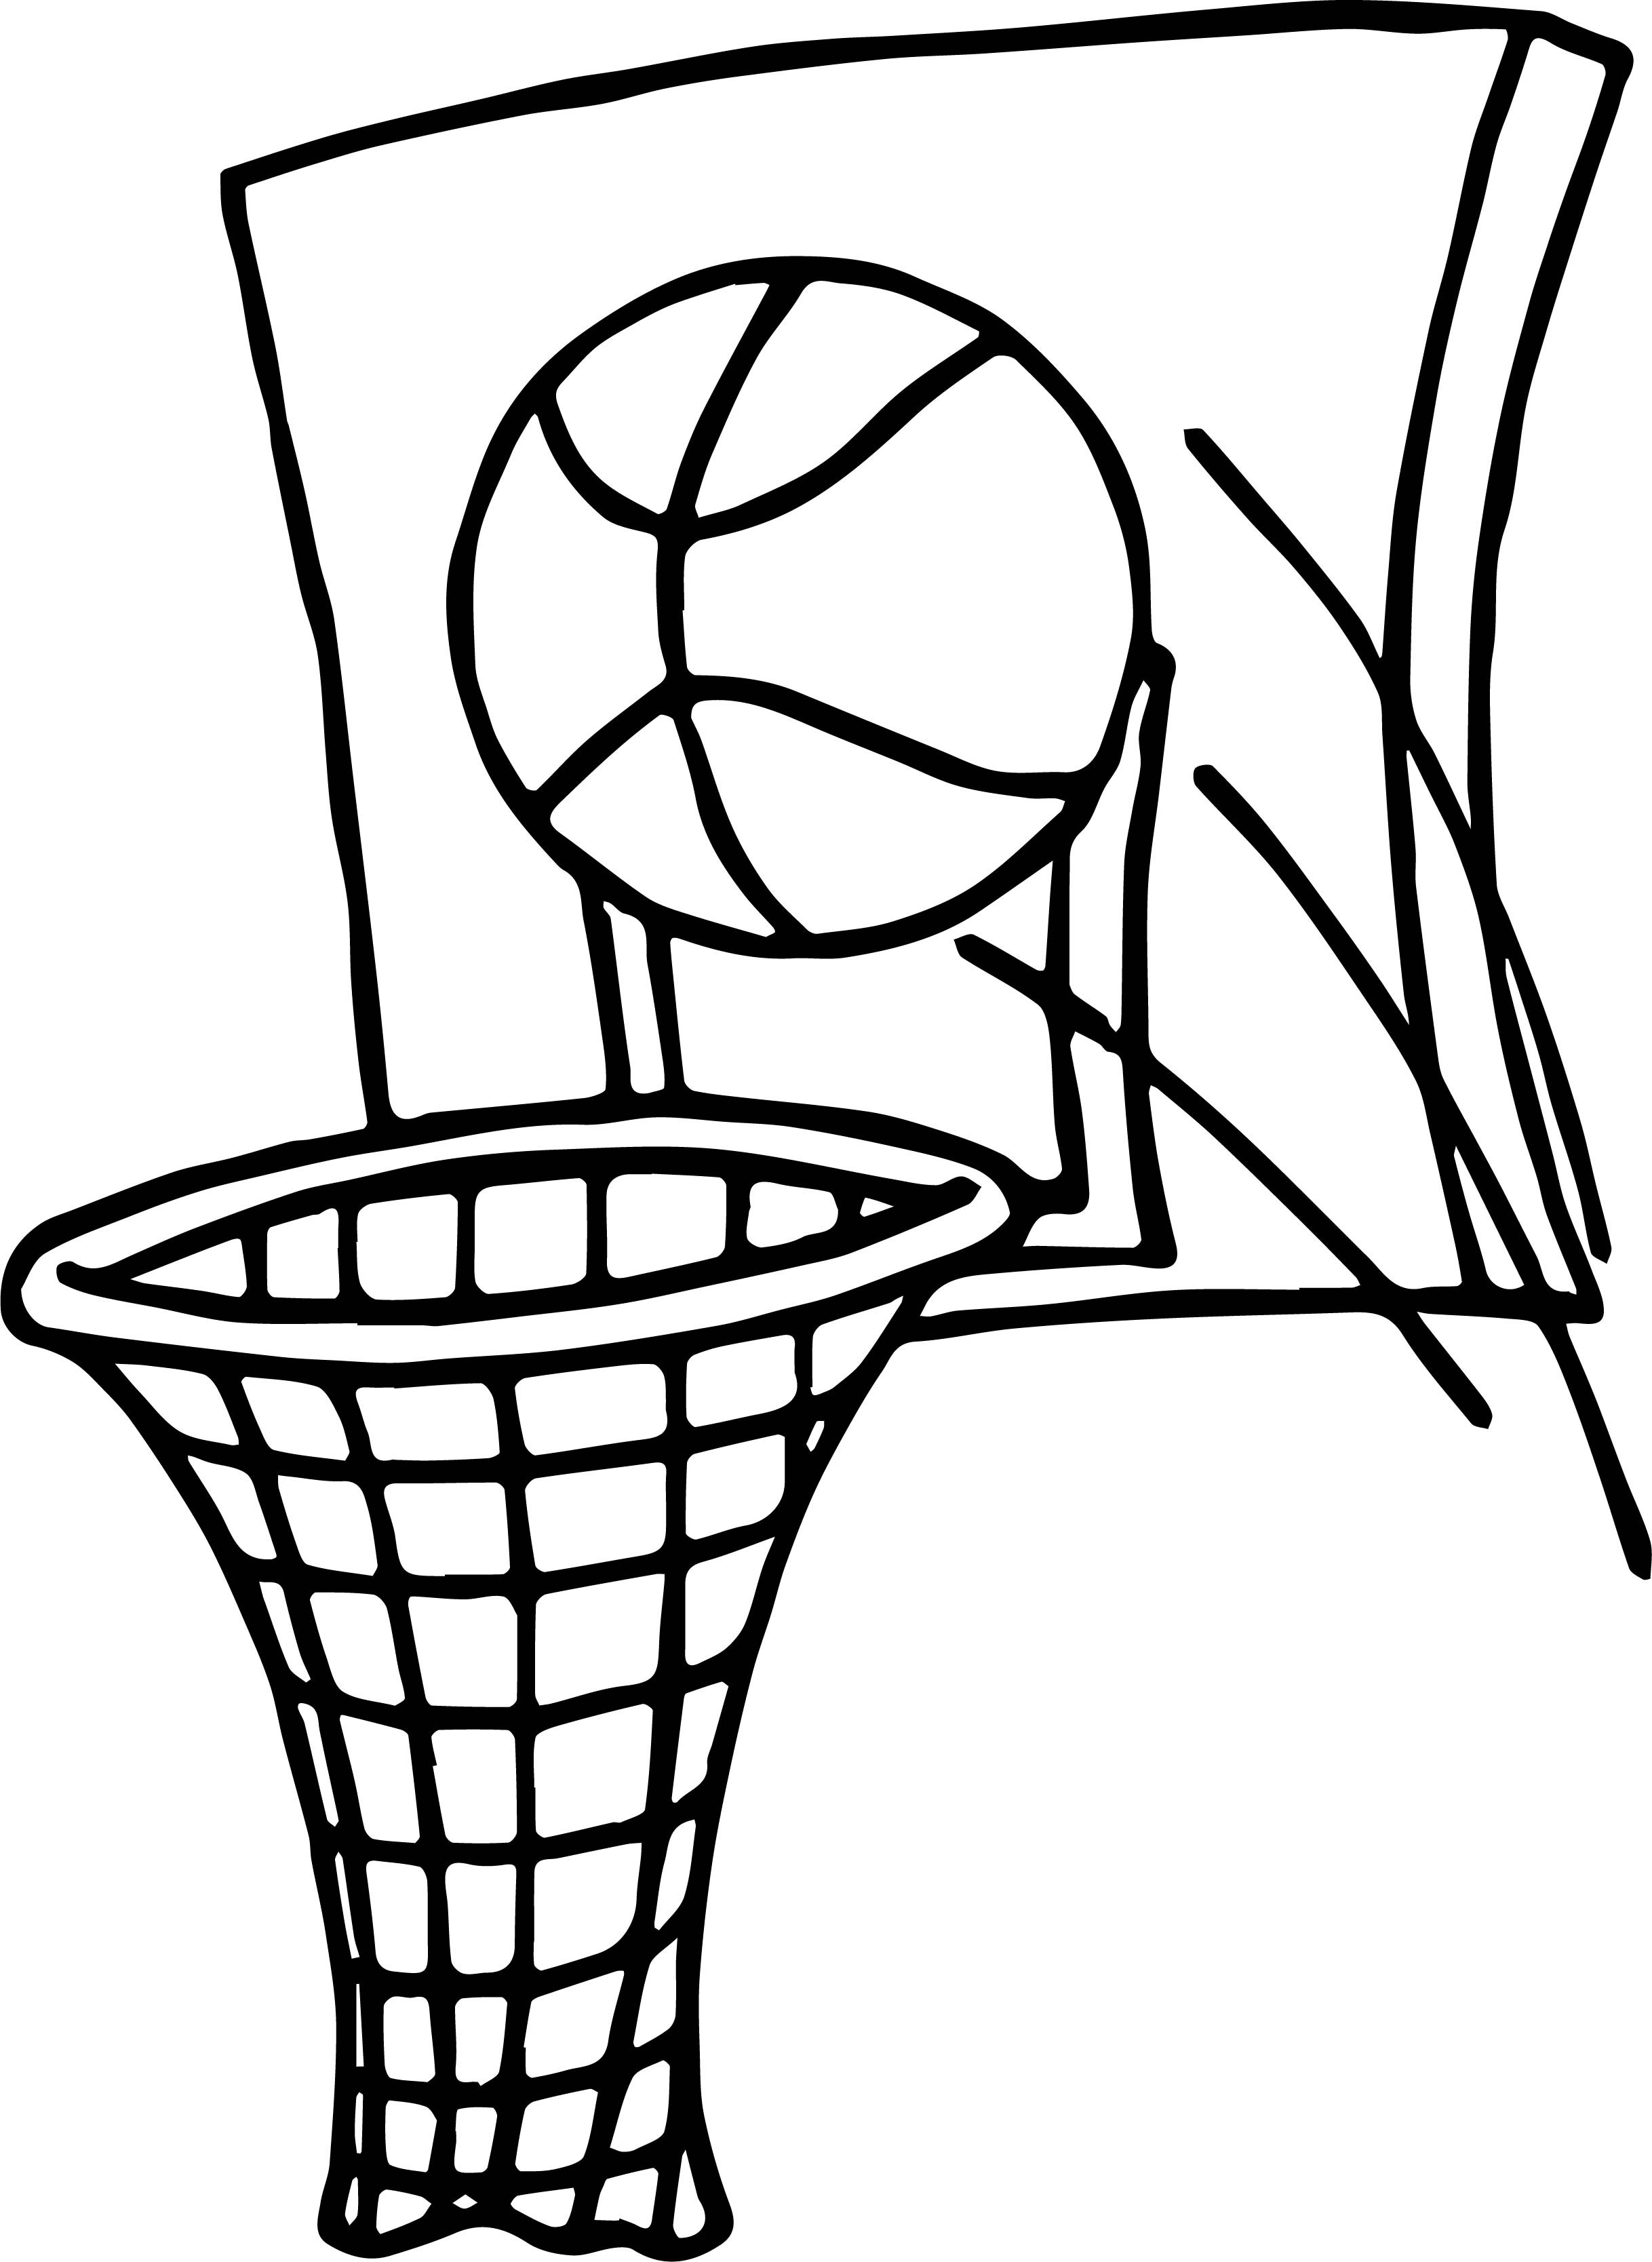 Basketball Coloring Book
 Ball Shot Playing Basketball Coloring Page